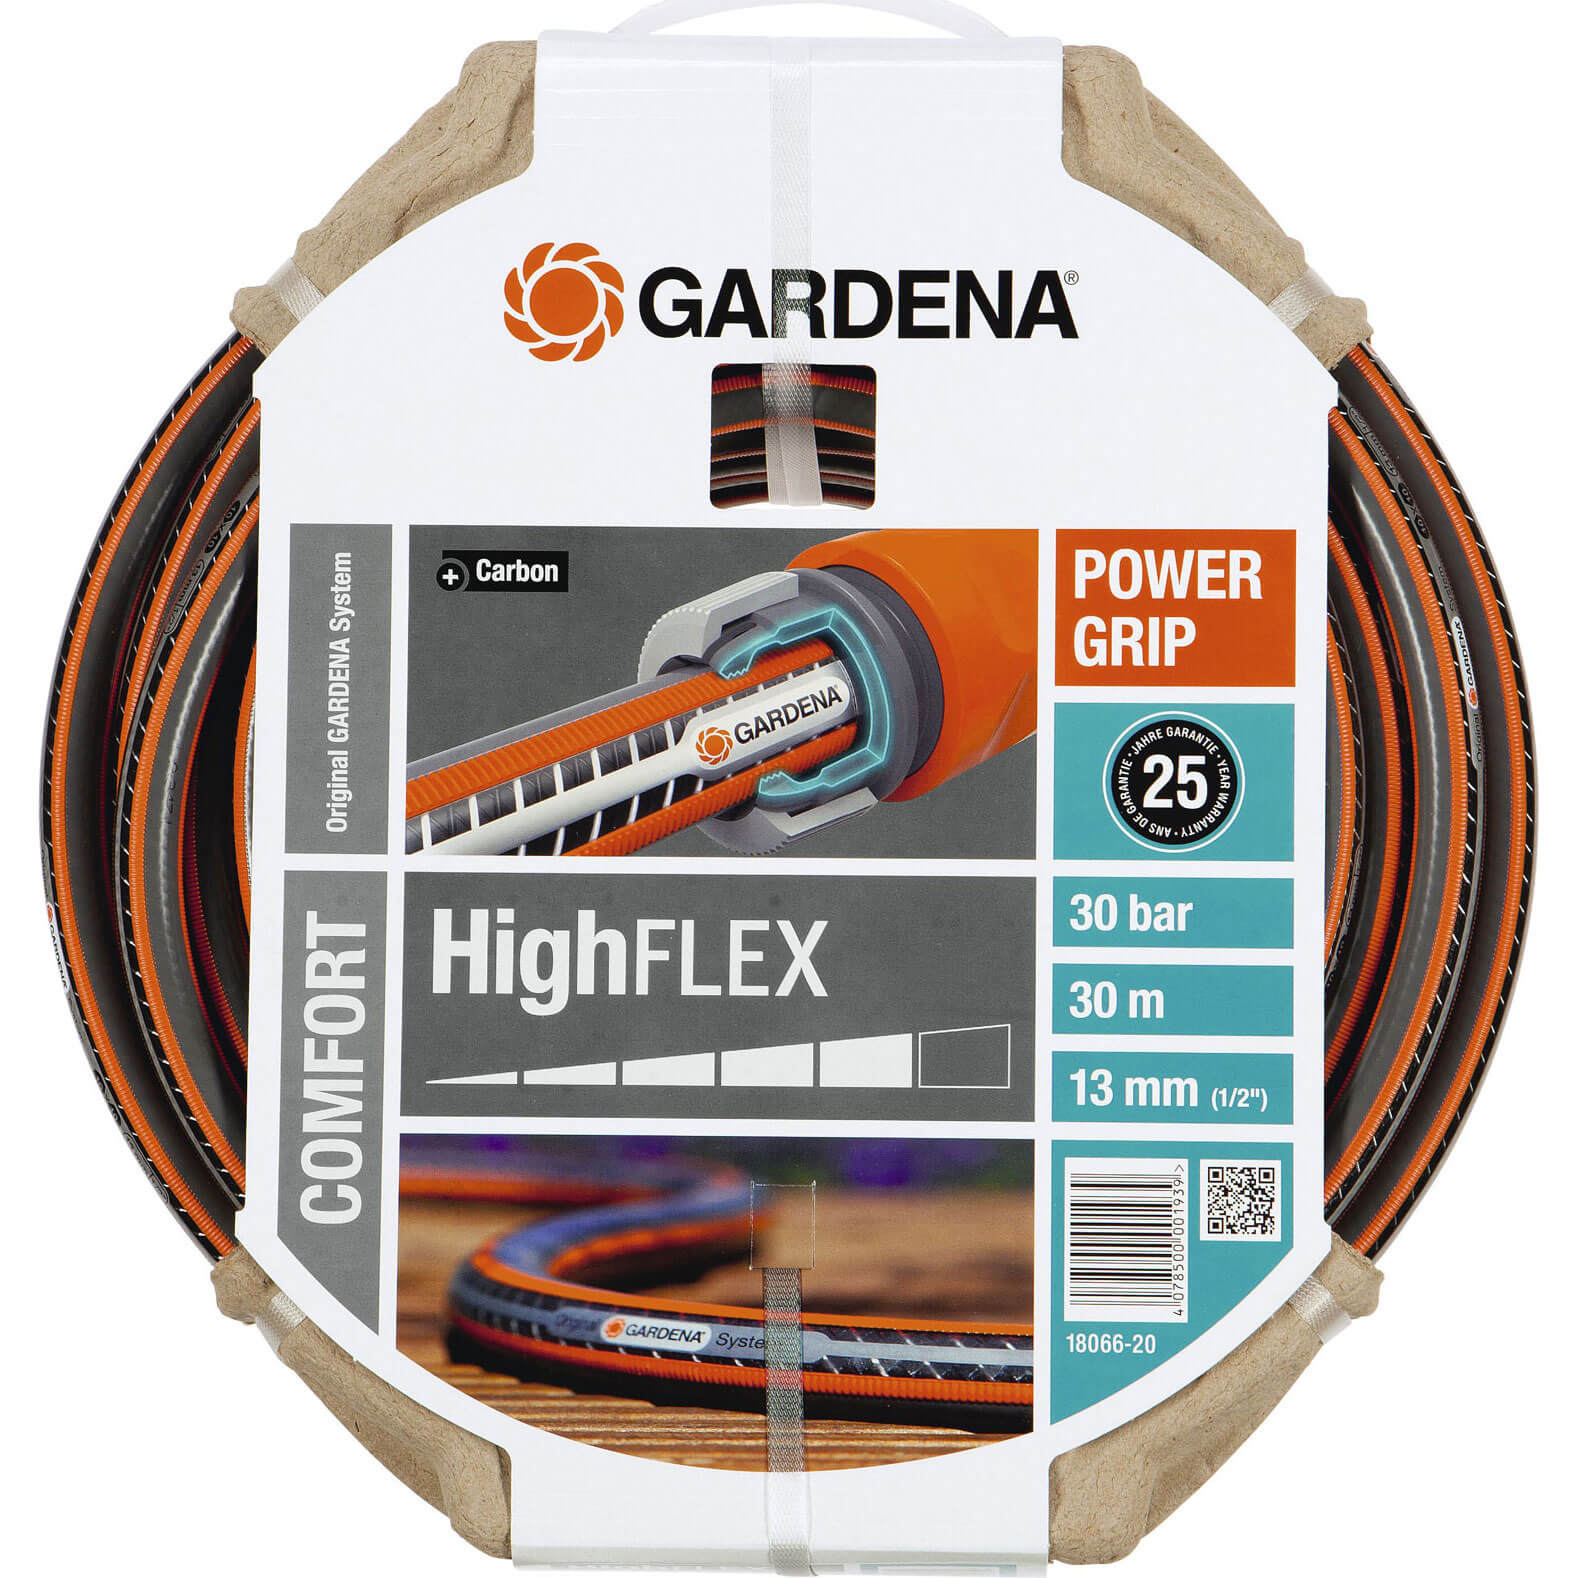 Gardena Comfort HighFLEX Hose Pipe 1/2" / 12.5mm 30m Grey & Orange